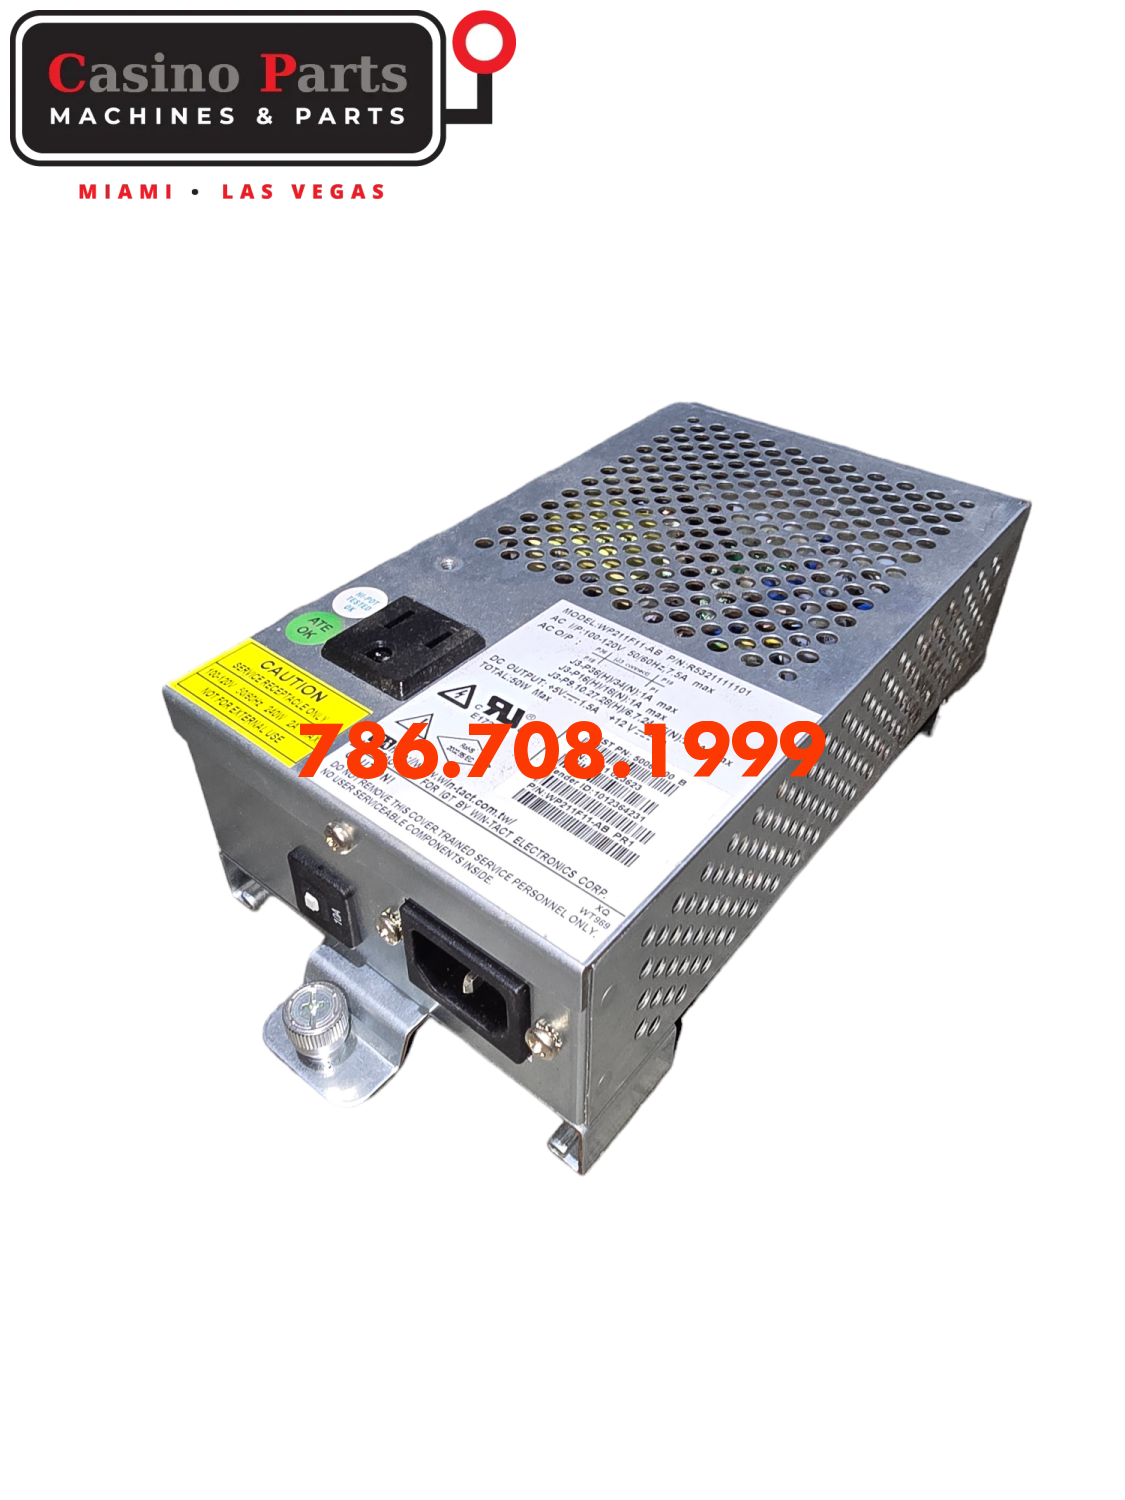 Igt G23 - Power Distribution Box Supplies